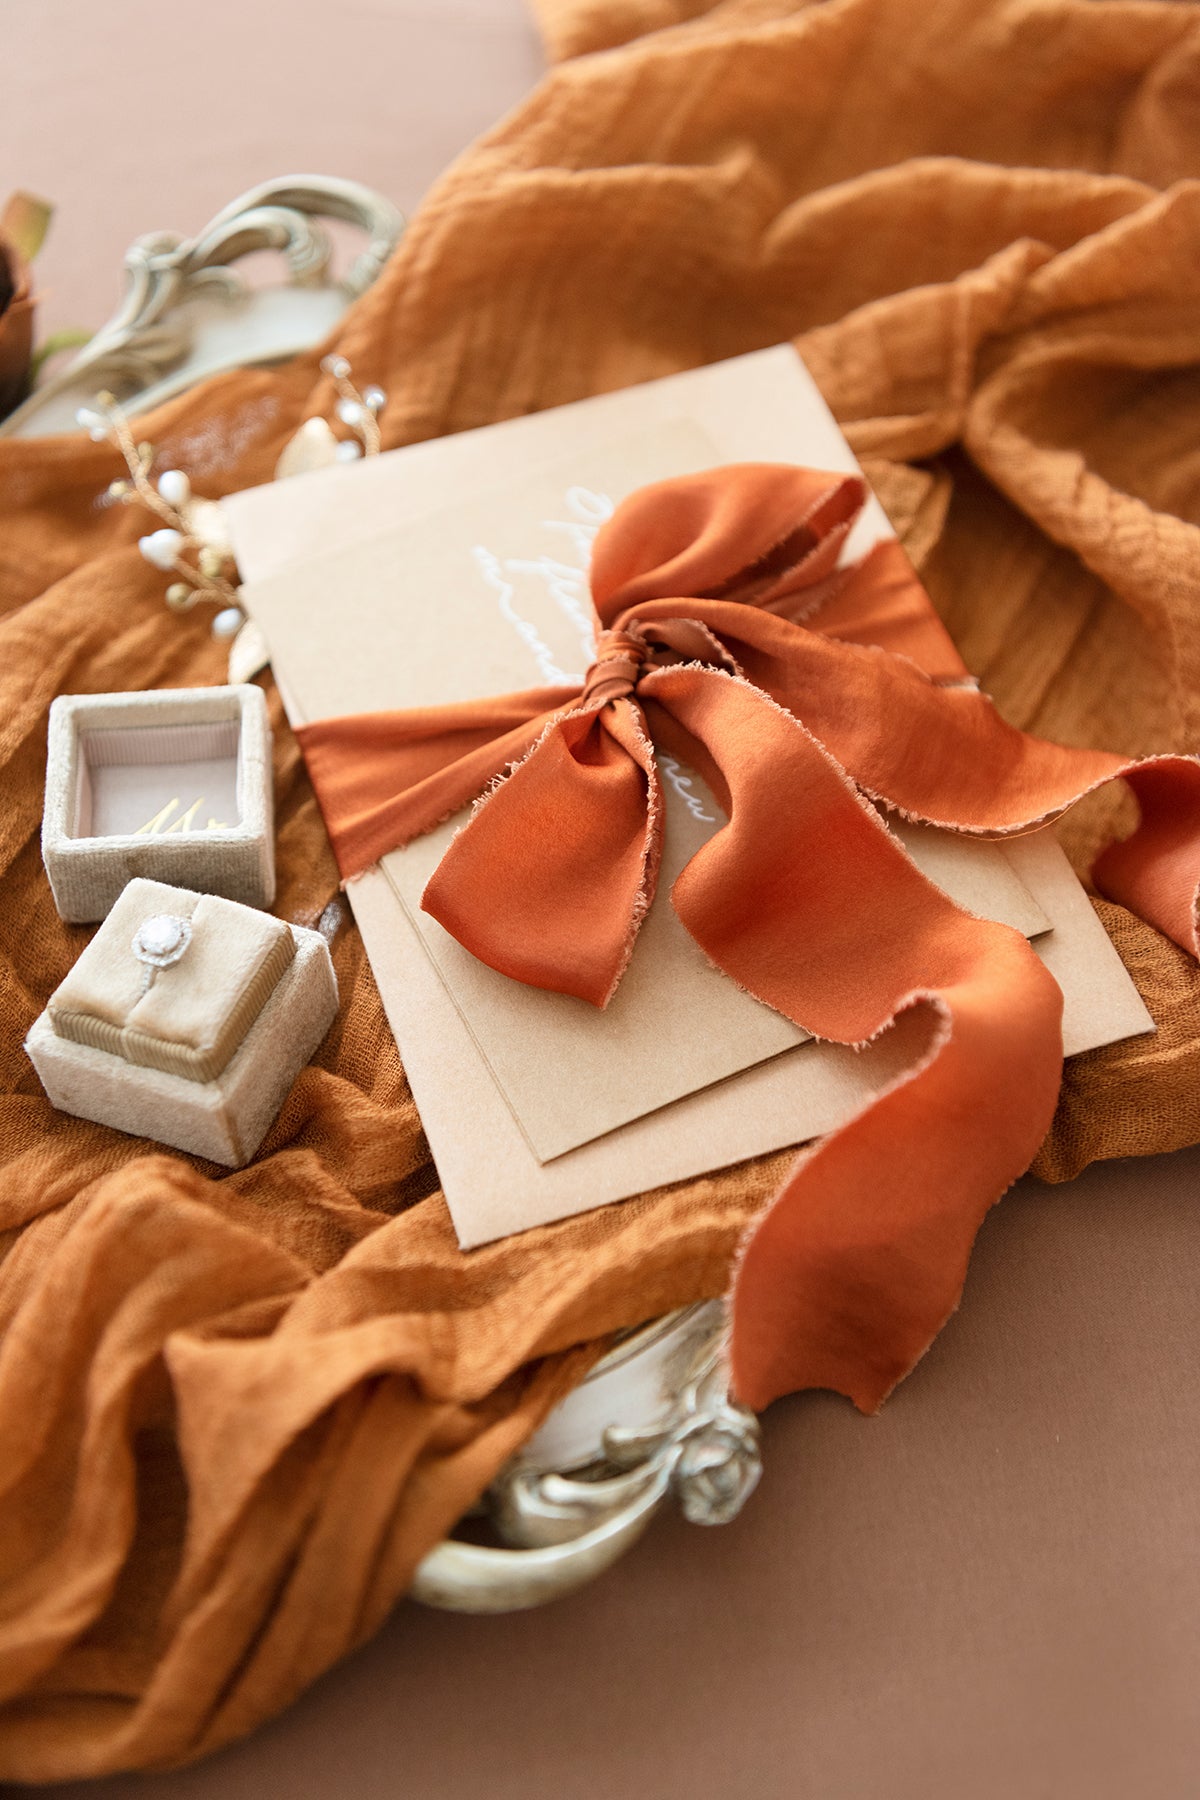  Mlurcu Terracotta Fringe Chiffon Silk Ribbon 1-1/2 Inch x 40Yd  Burnt Orange Ribbons Set Handmade Frayed Fabric Ribbon Boho Cloth Ribbon  for Wedding Invitation Bridal Bouquet Gift Wrapping DIY Crafts 